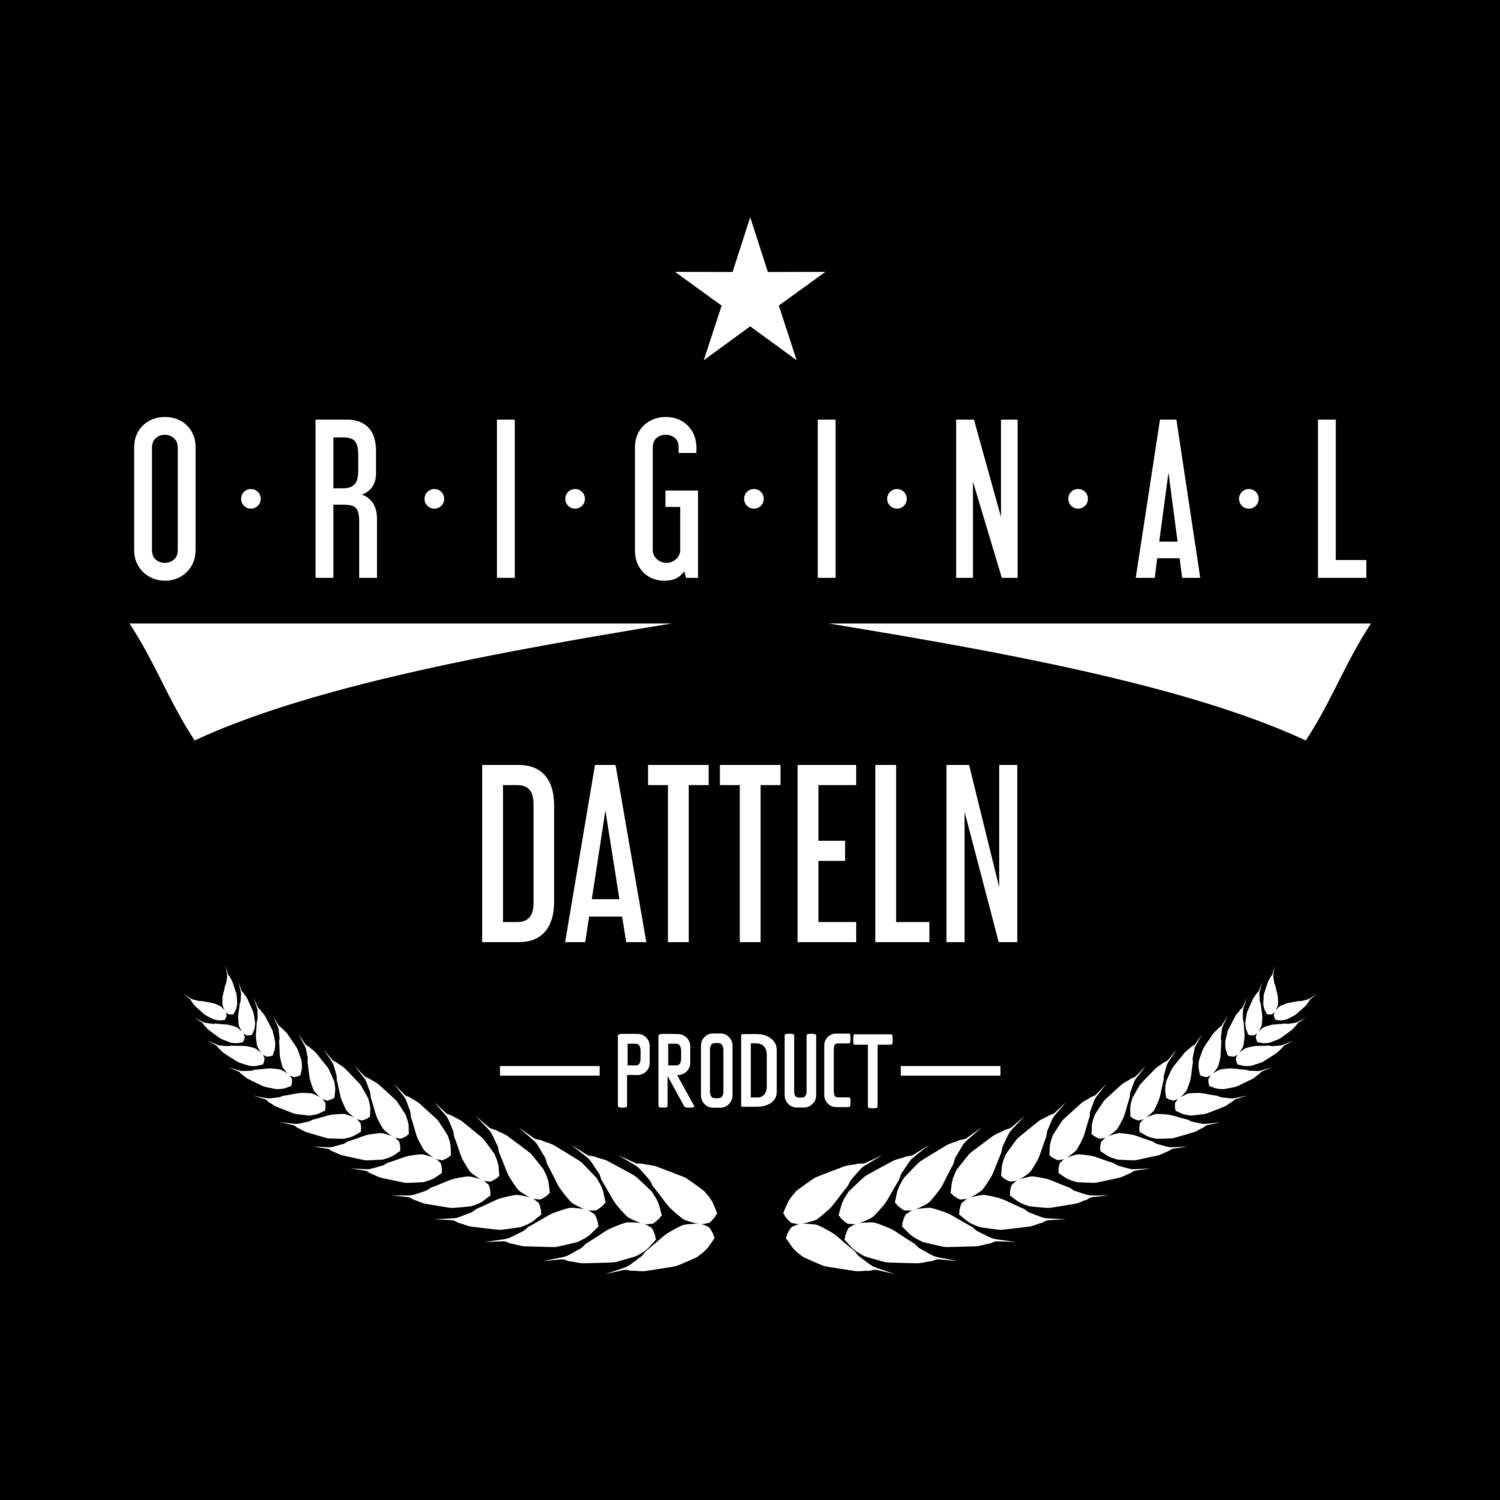 Datteln T-Shirt »Original Product«